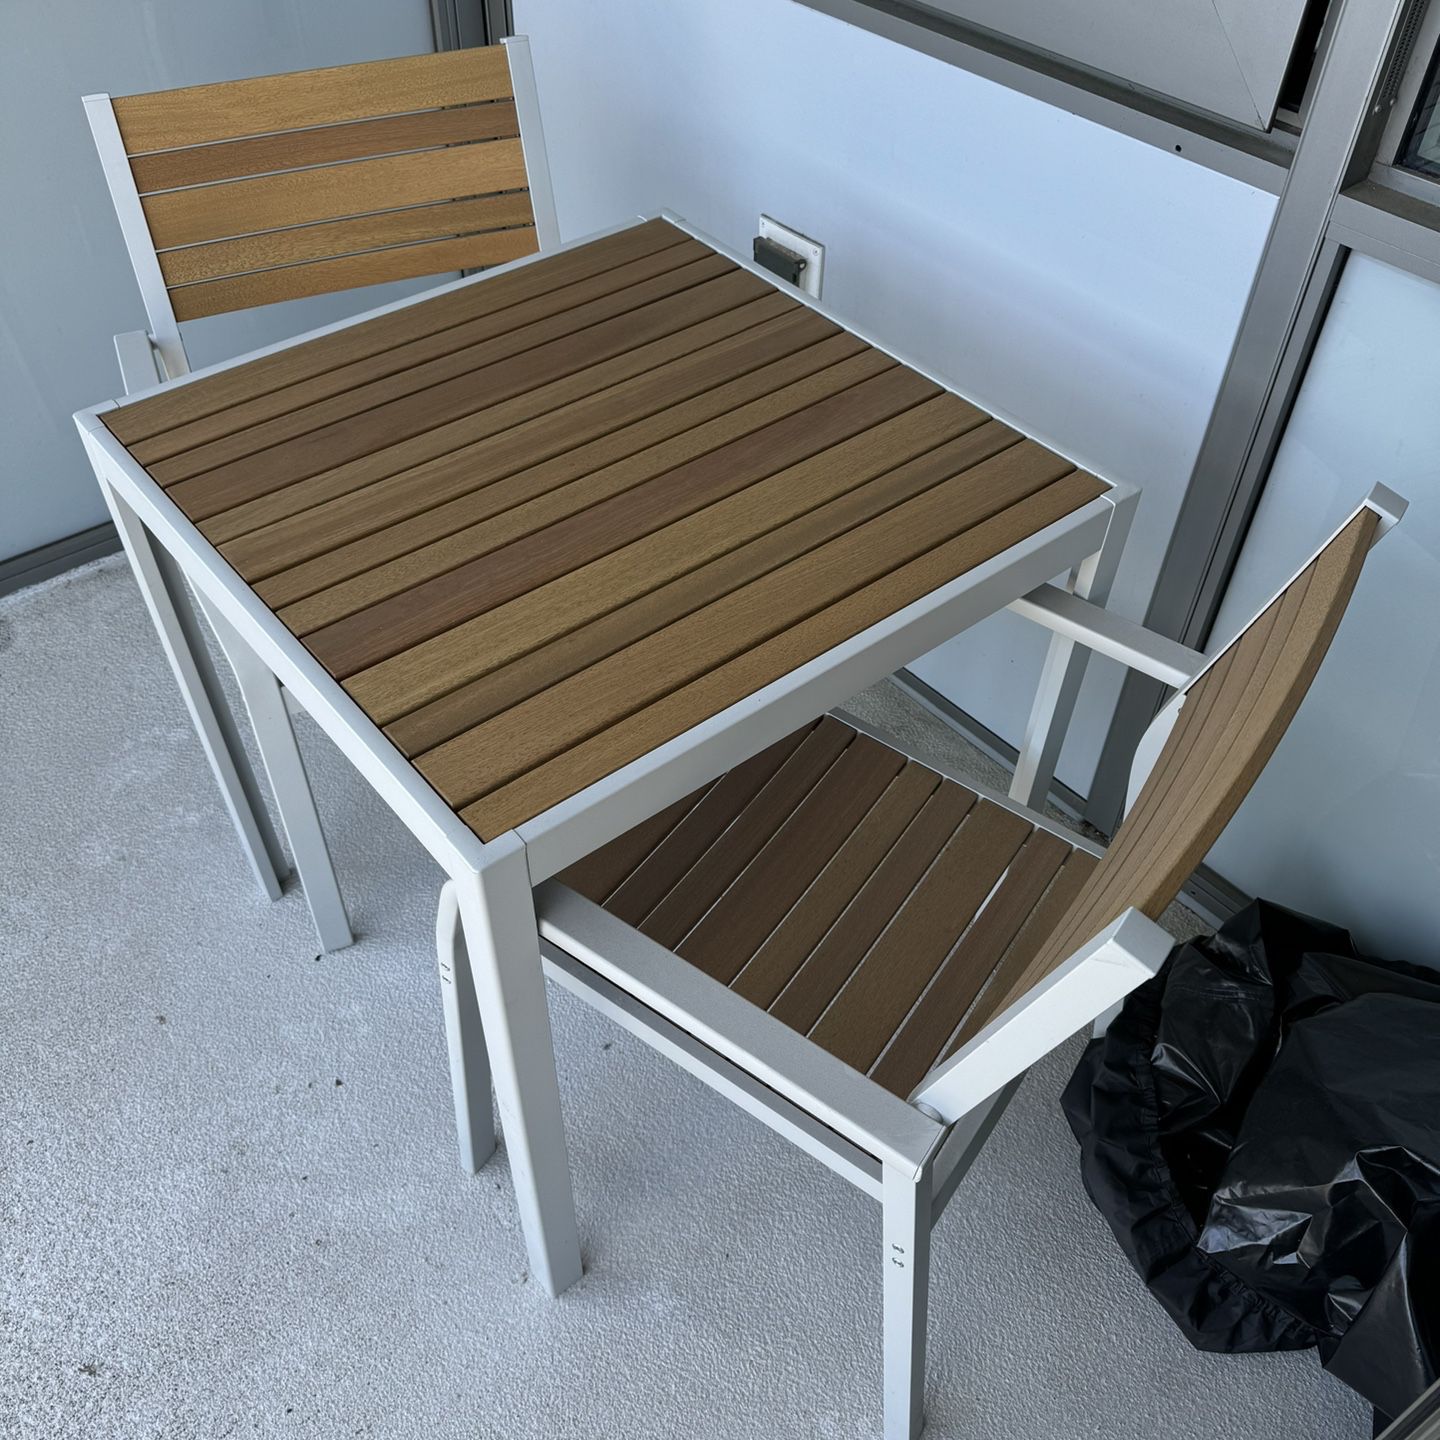 IKEA Patio Table Set